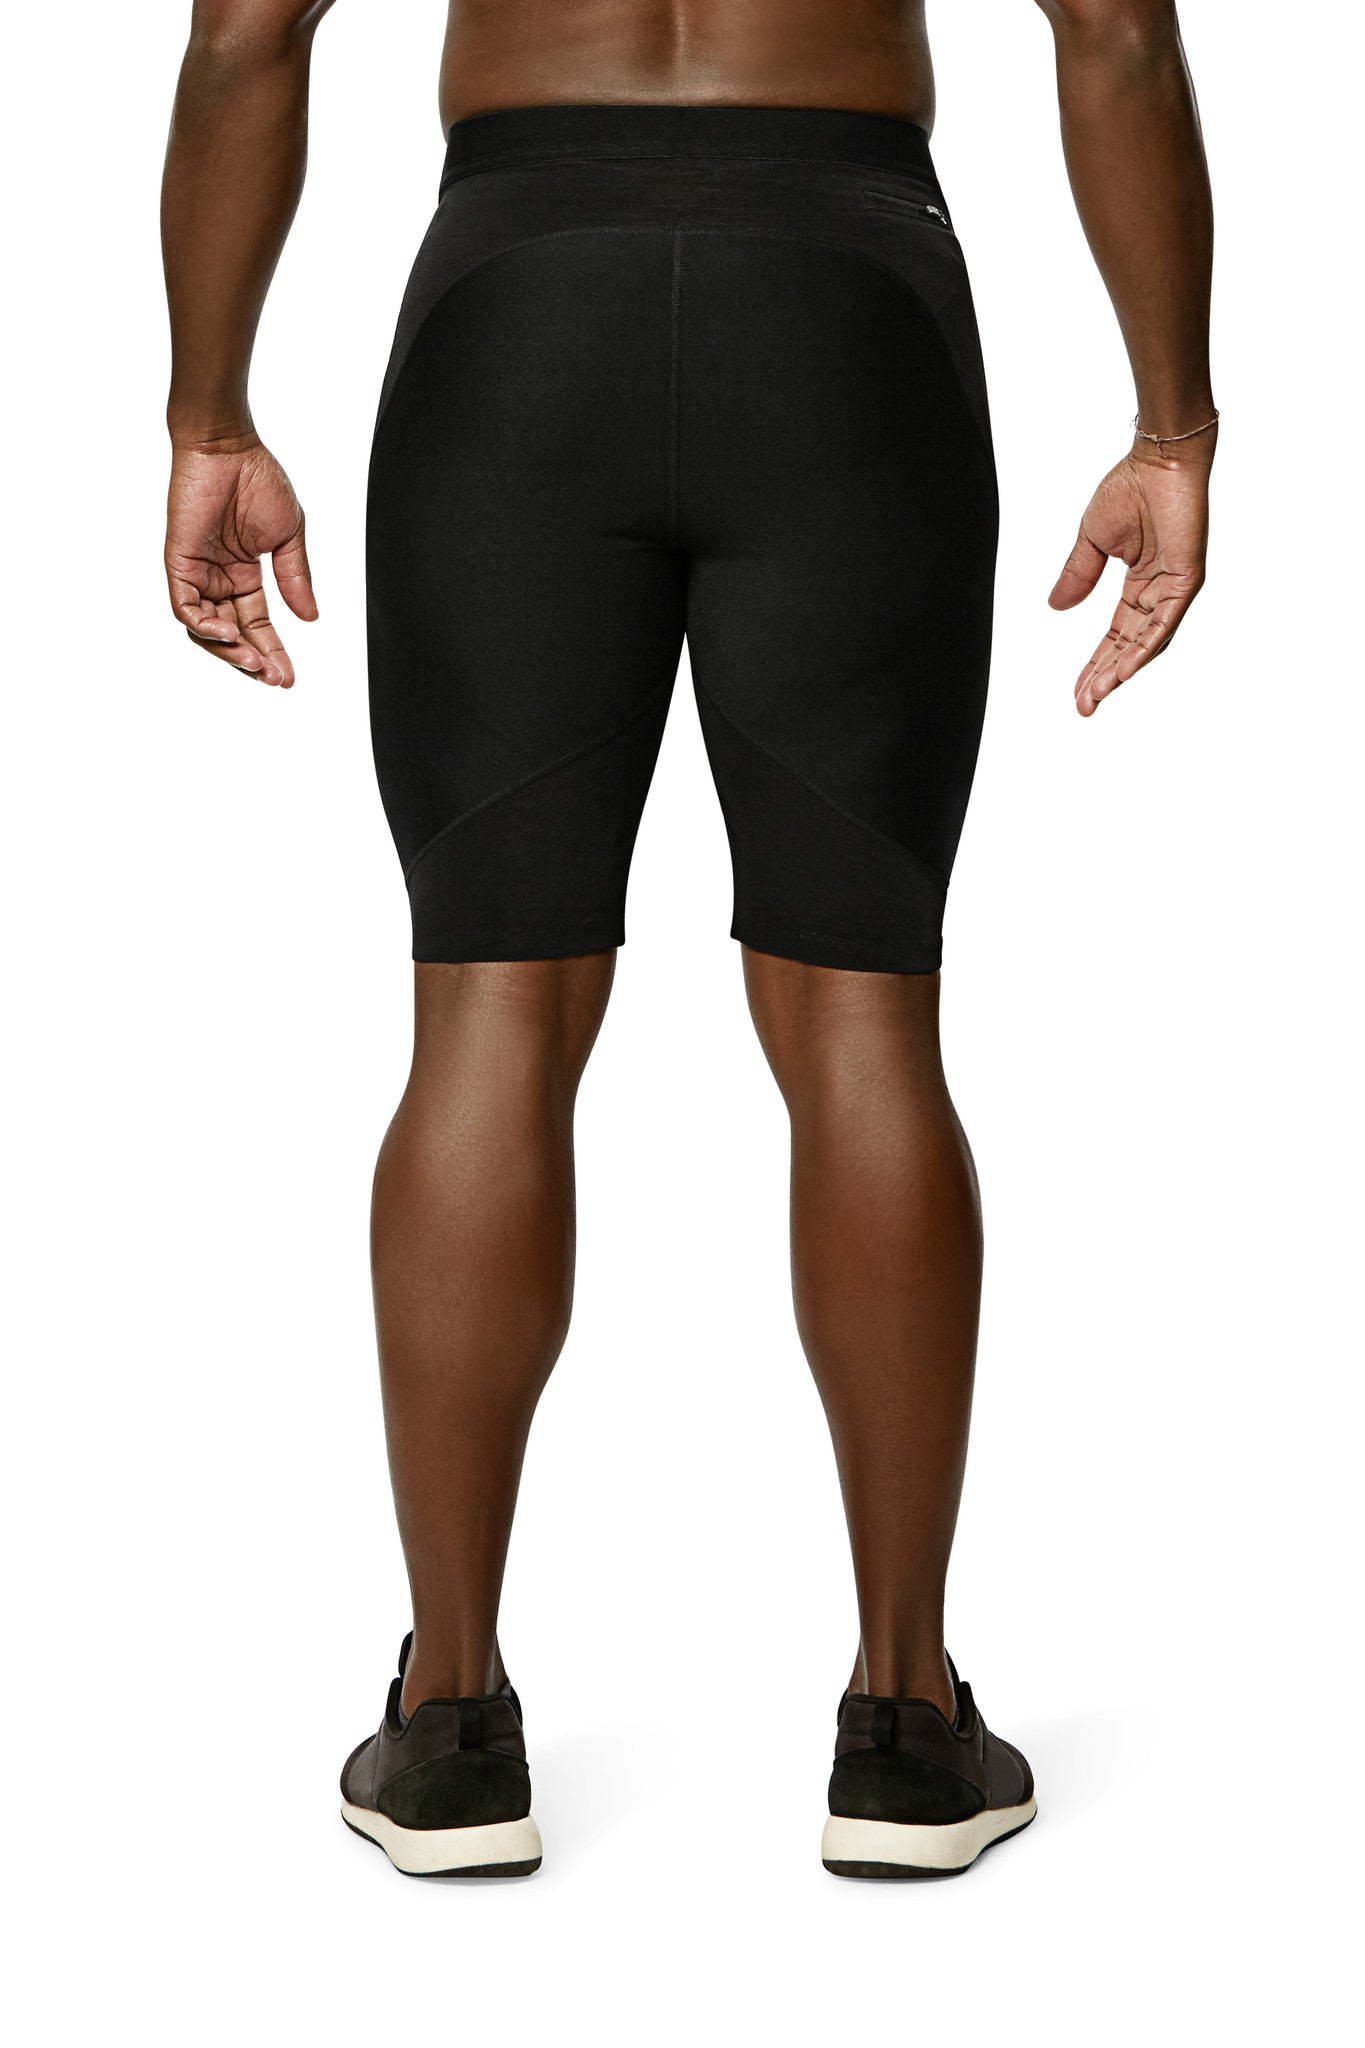 Pro Resistance Shorts for Men - Black – Physiclo